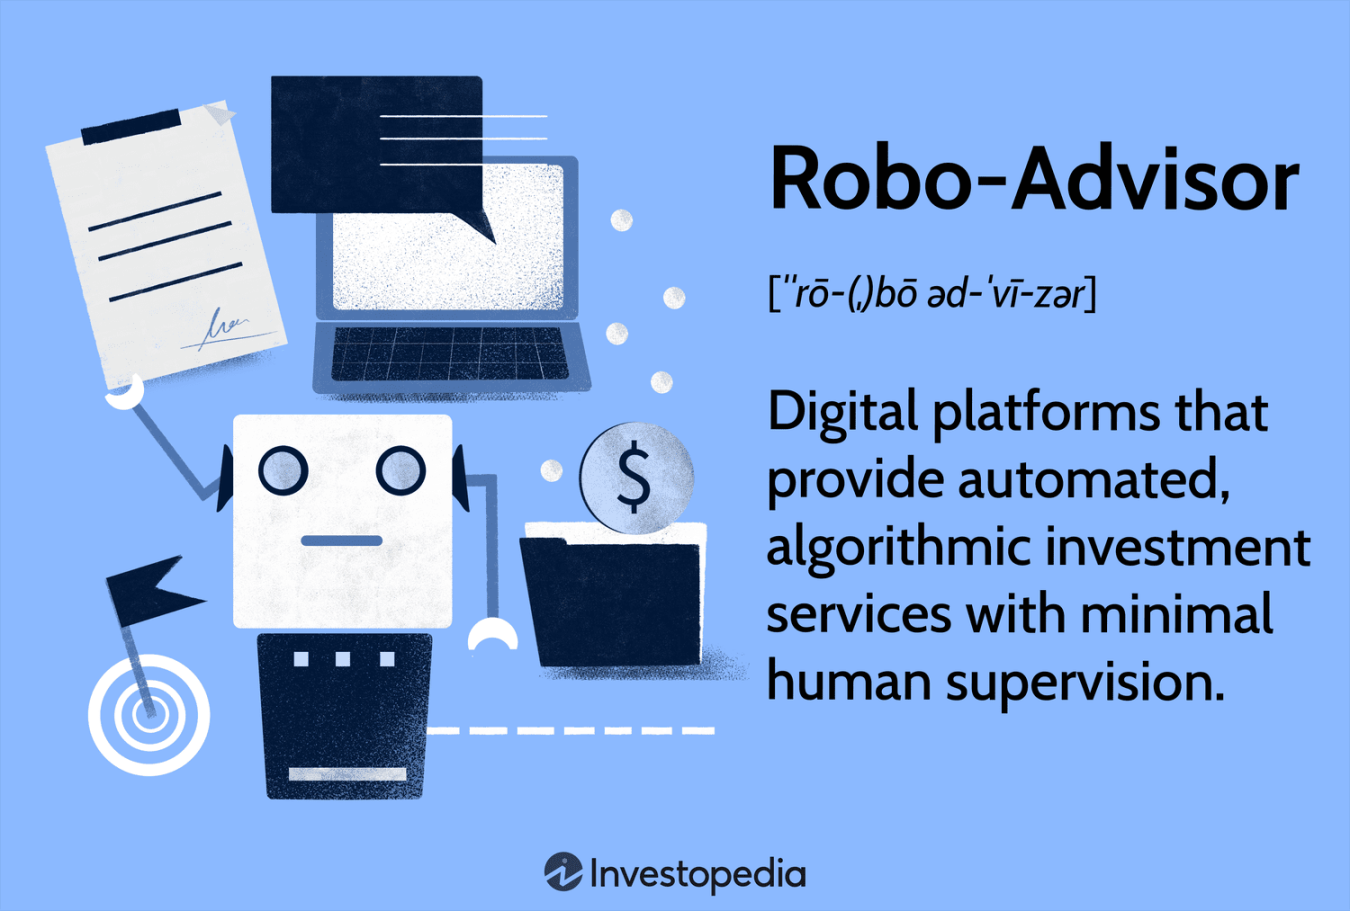 What Is a Robo-Advisor?